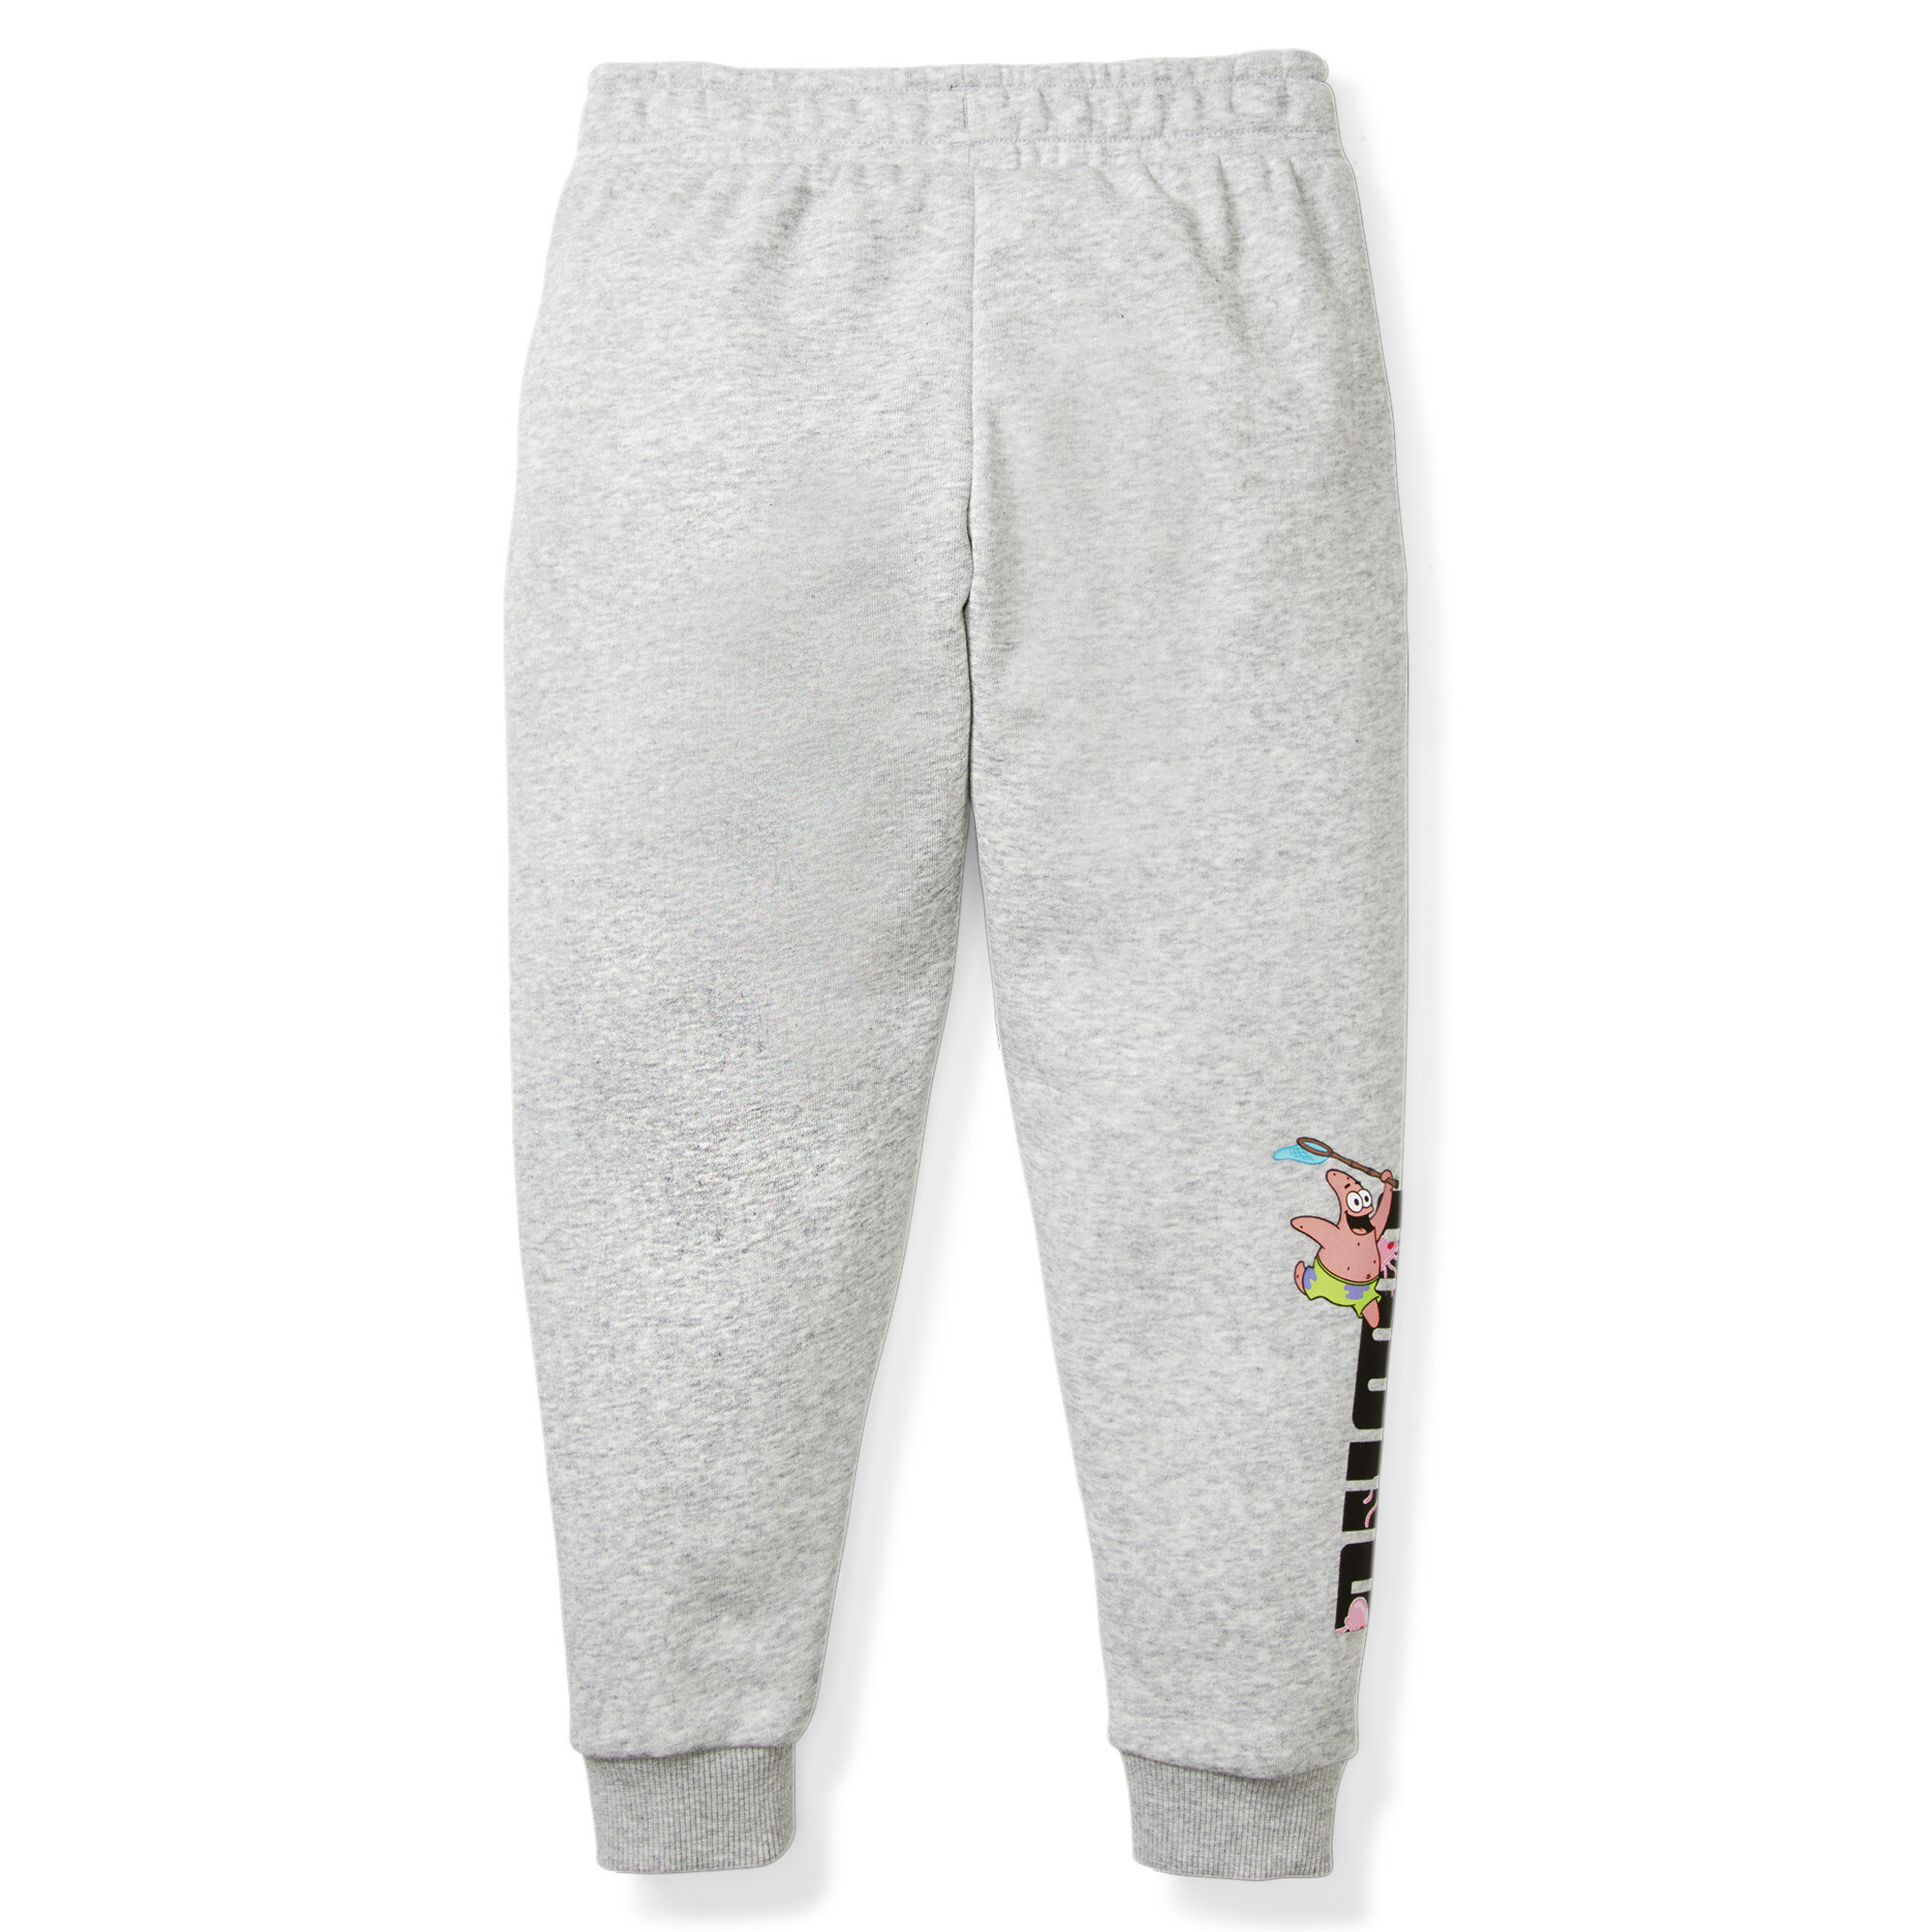 Puma X SPONGEBOB Sweatpants Kids, Gray, Size 4-5Y, Clothing